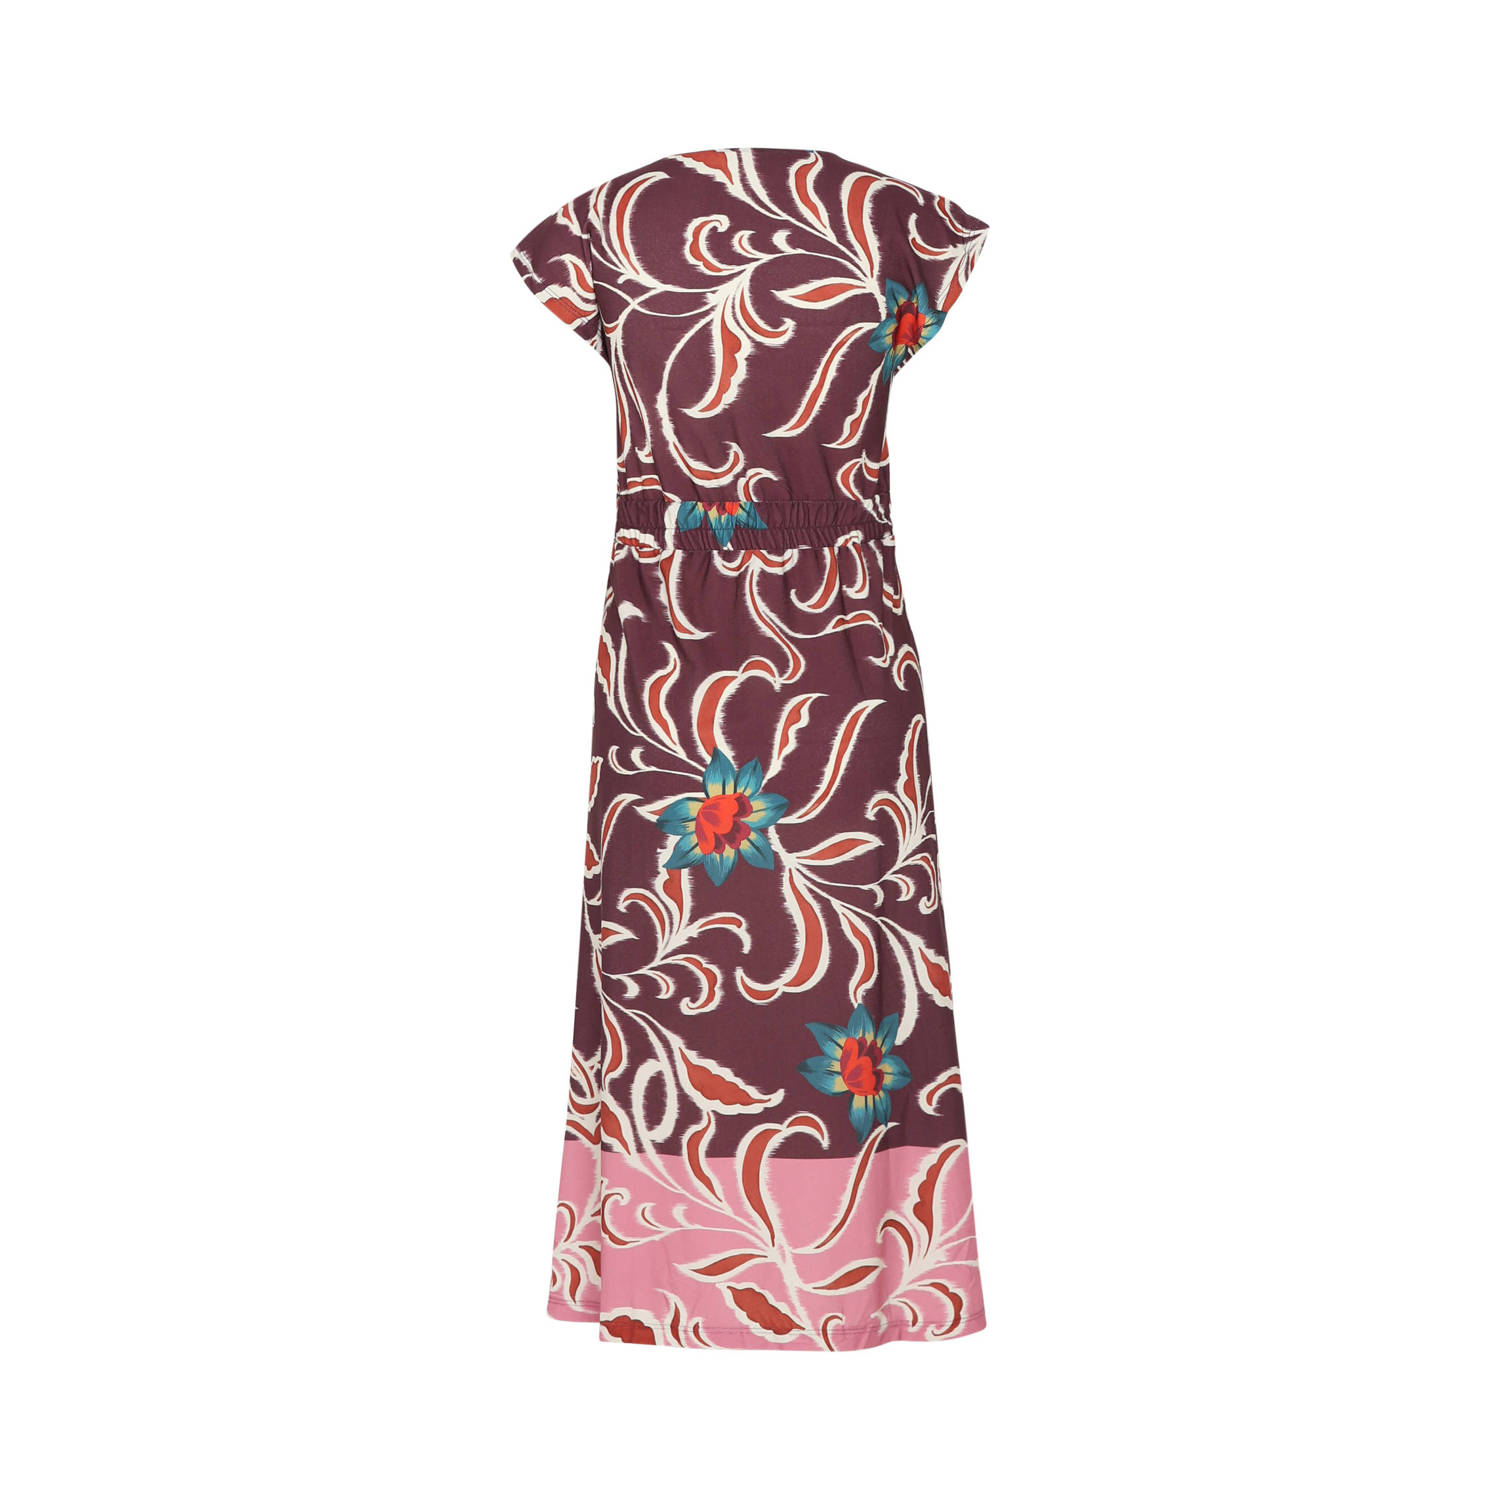 Cassis jurk met all over print donkerrood roze